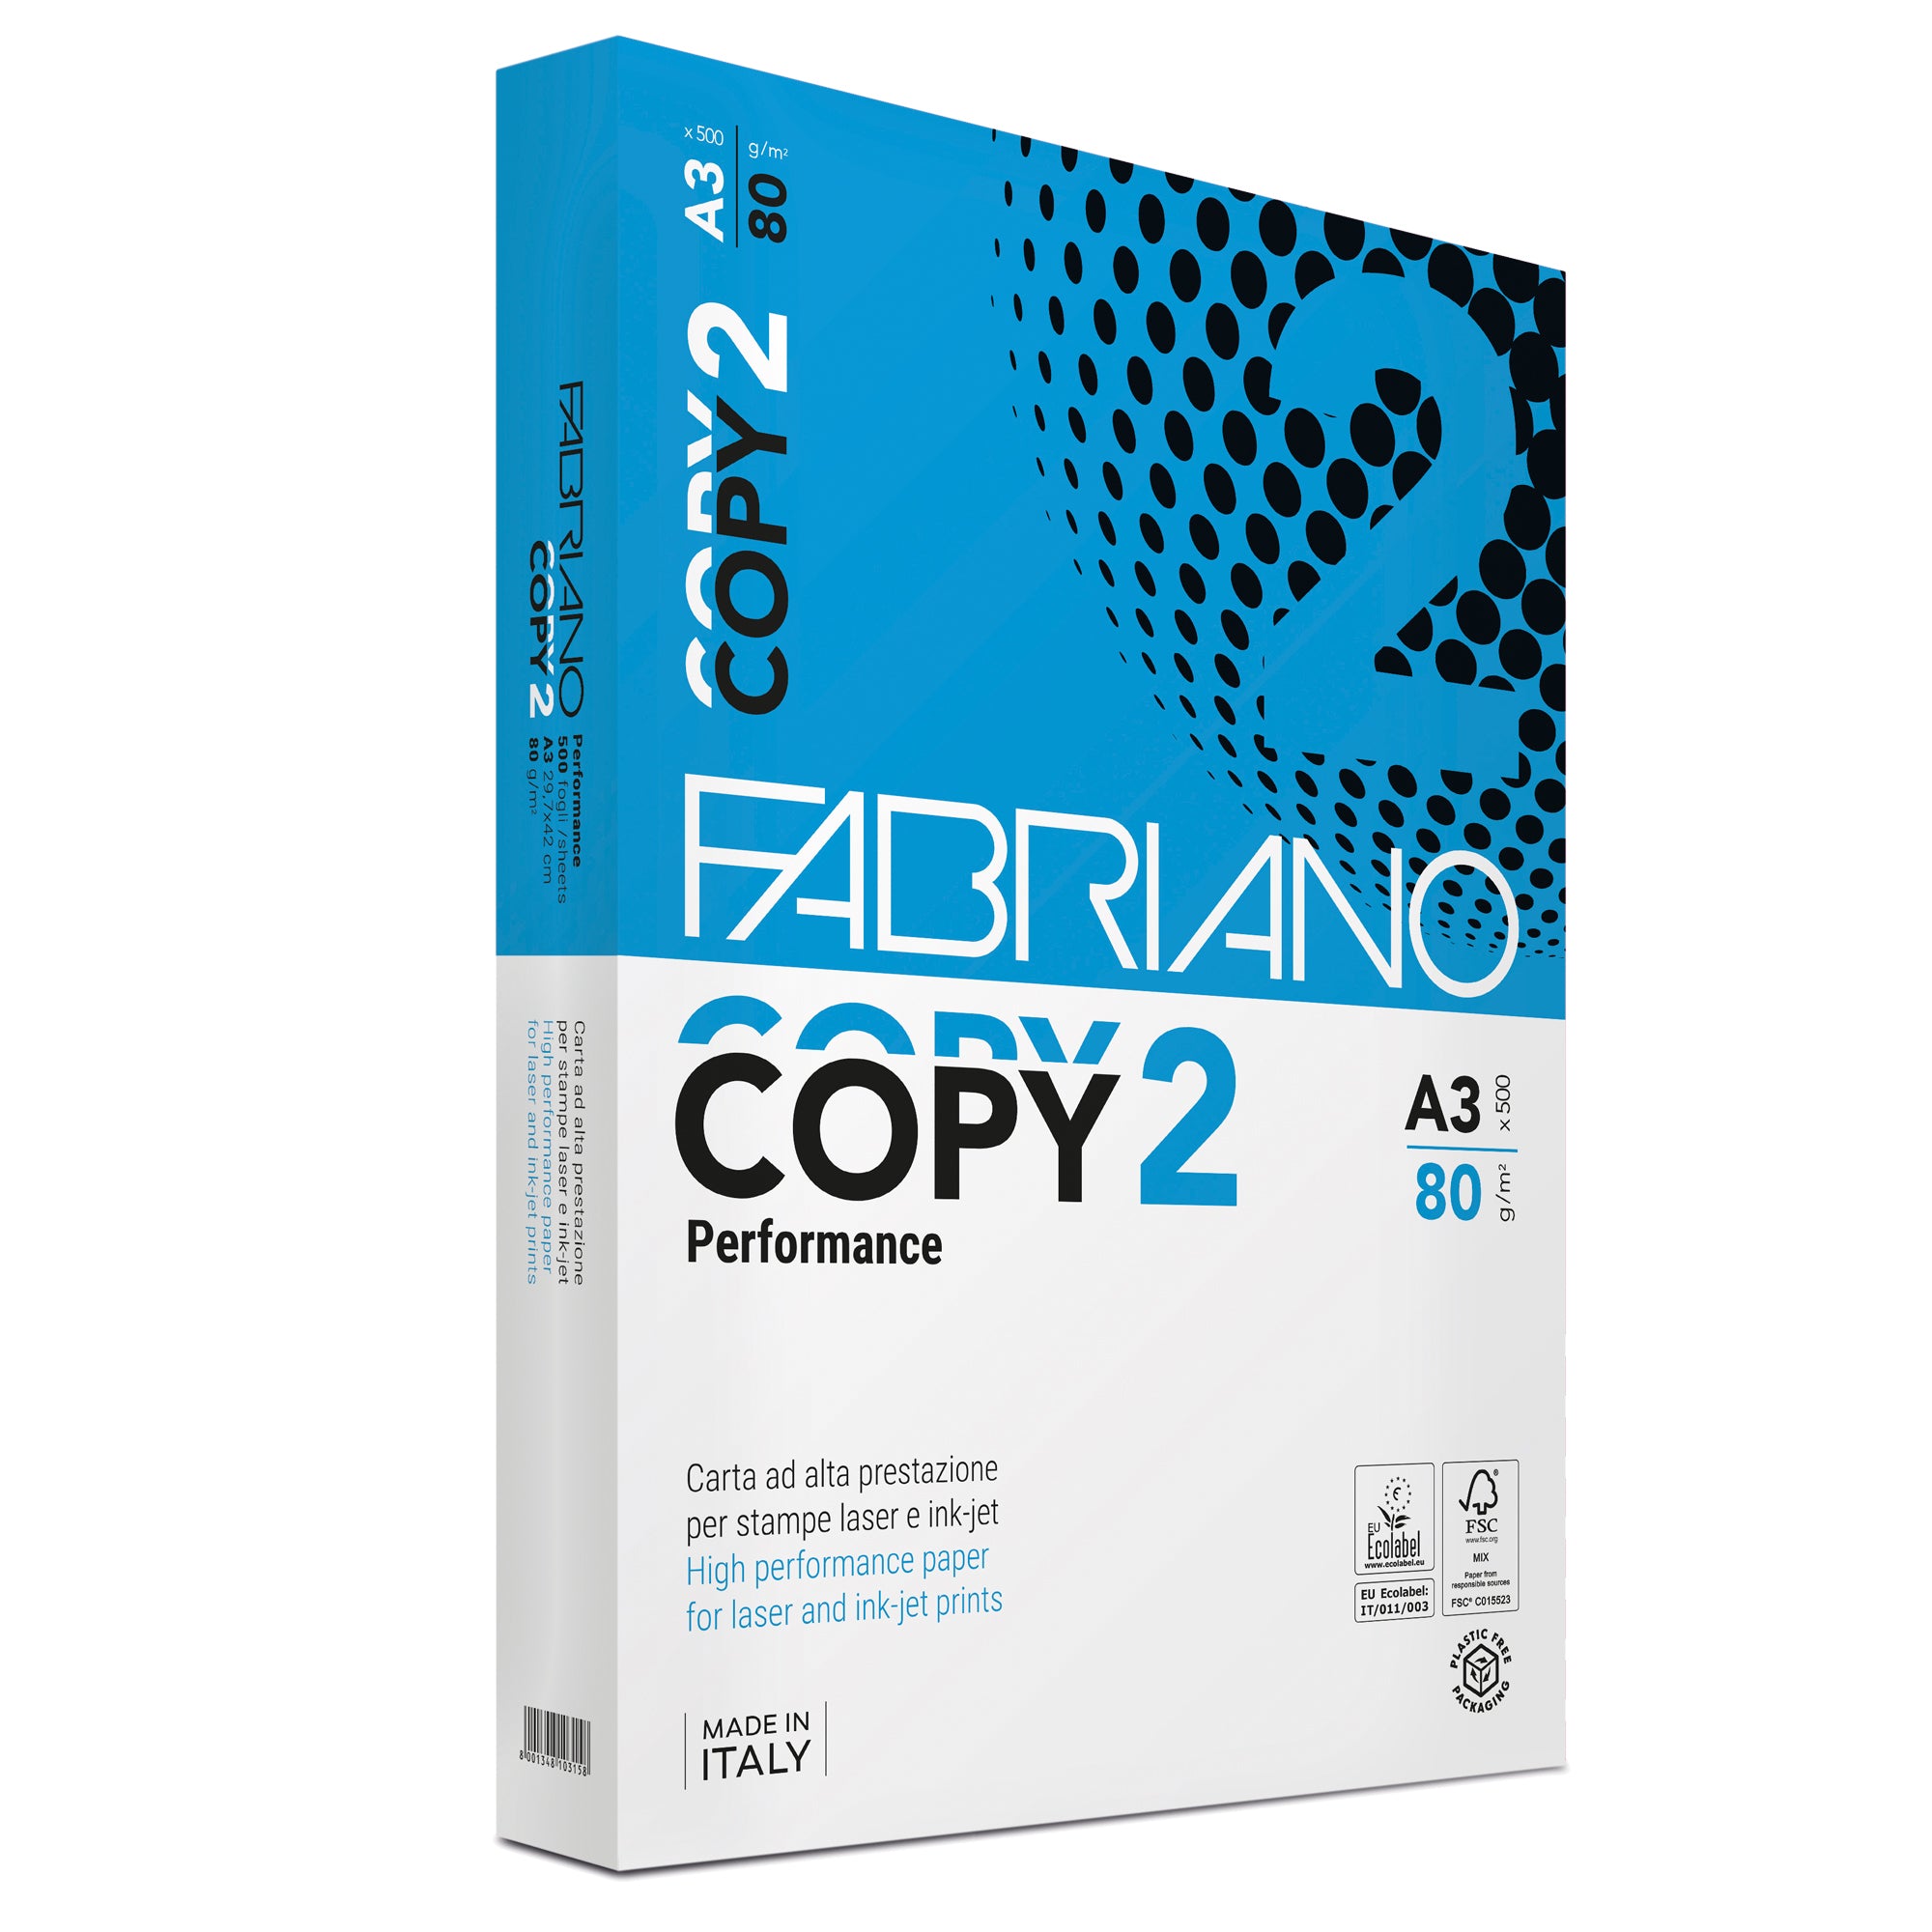 fabriano-carta-copy2-a3-80gr-500fg-performance